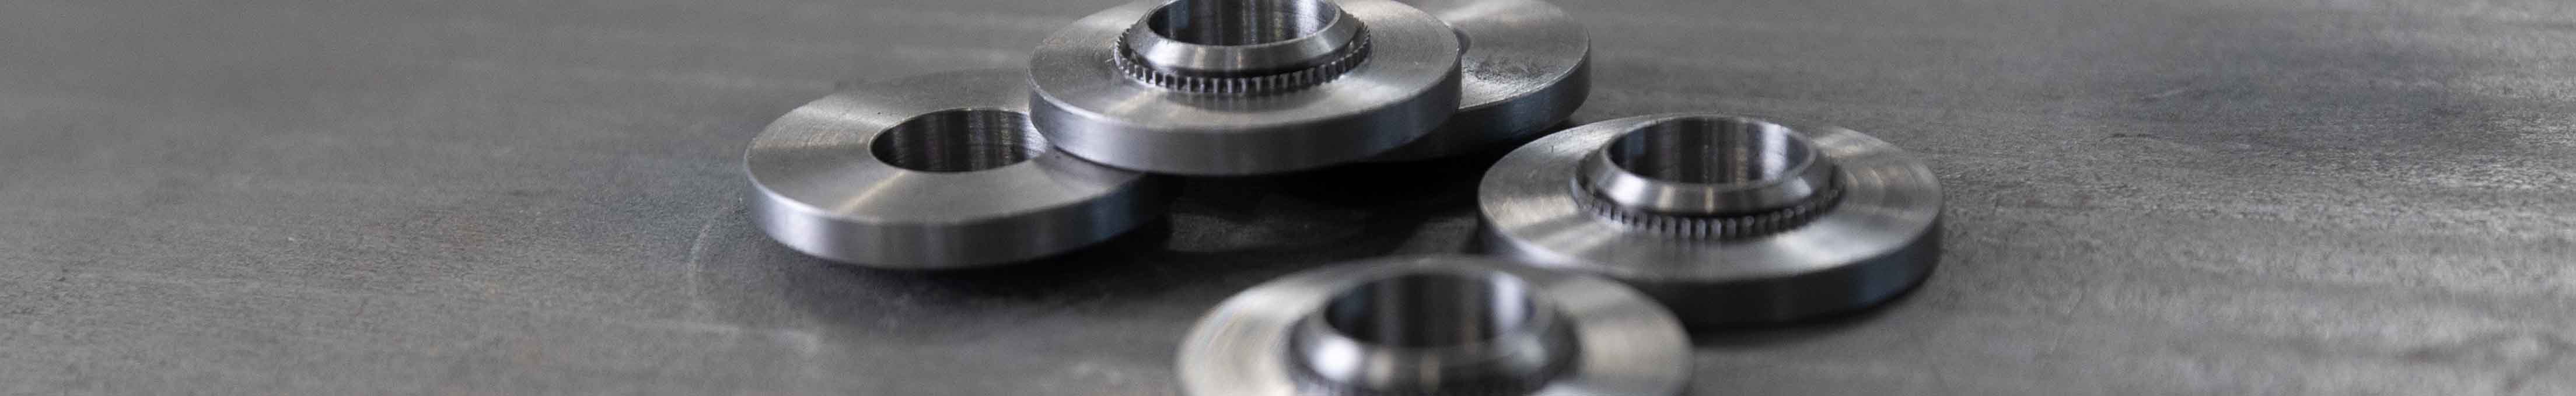 autoriv fasteners automation abstandshalter isolator chemische trennung material metall stahl aluminium kunststoff